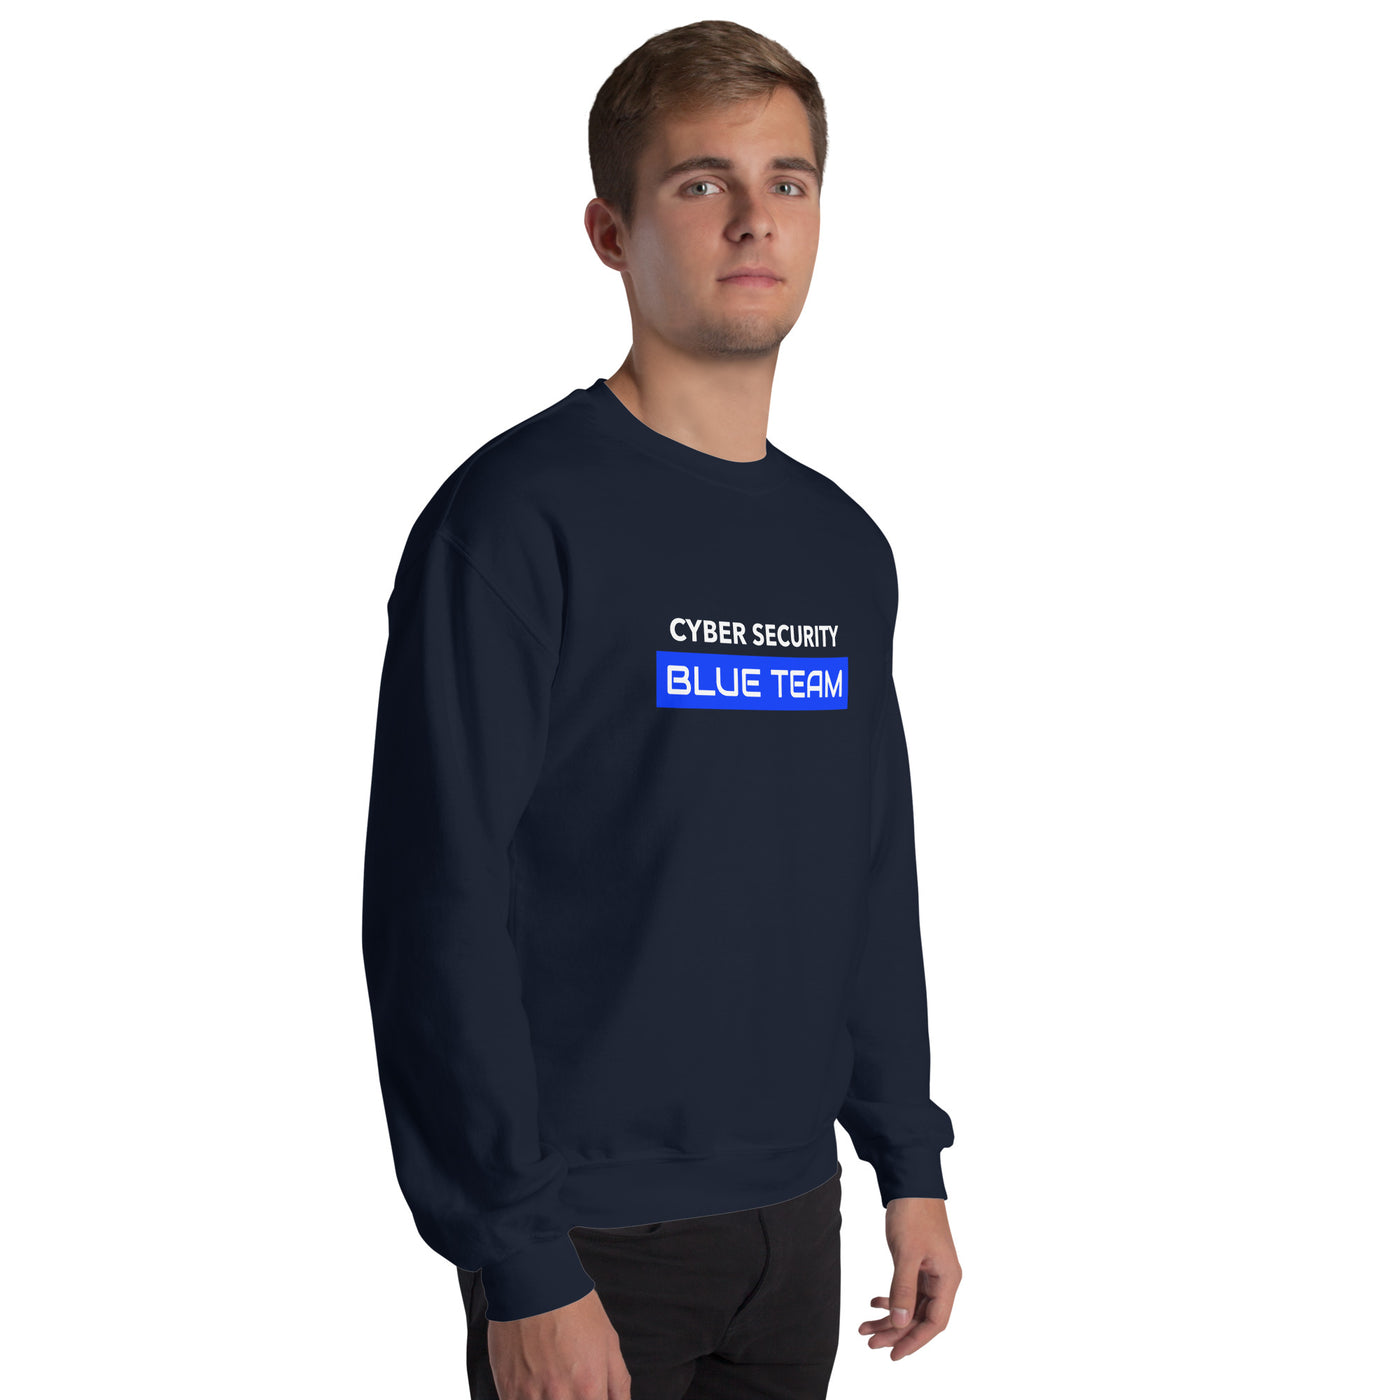 Cyber Security Blue Team V12 - Unisex Sweatshirt